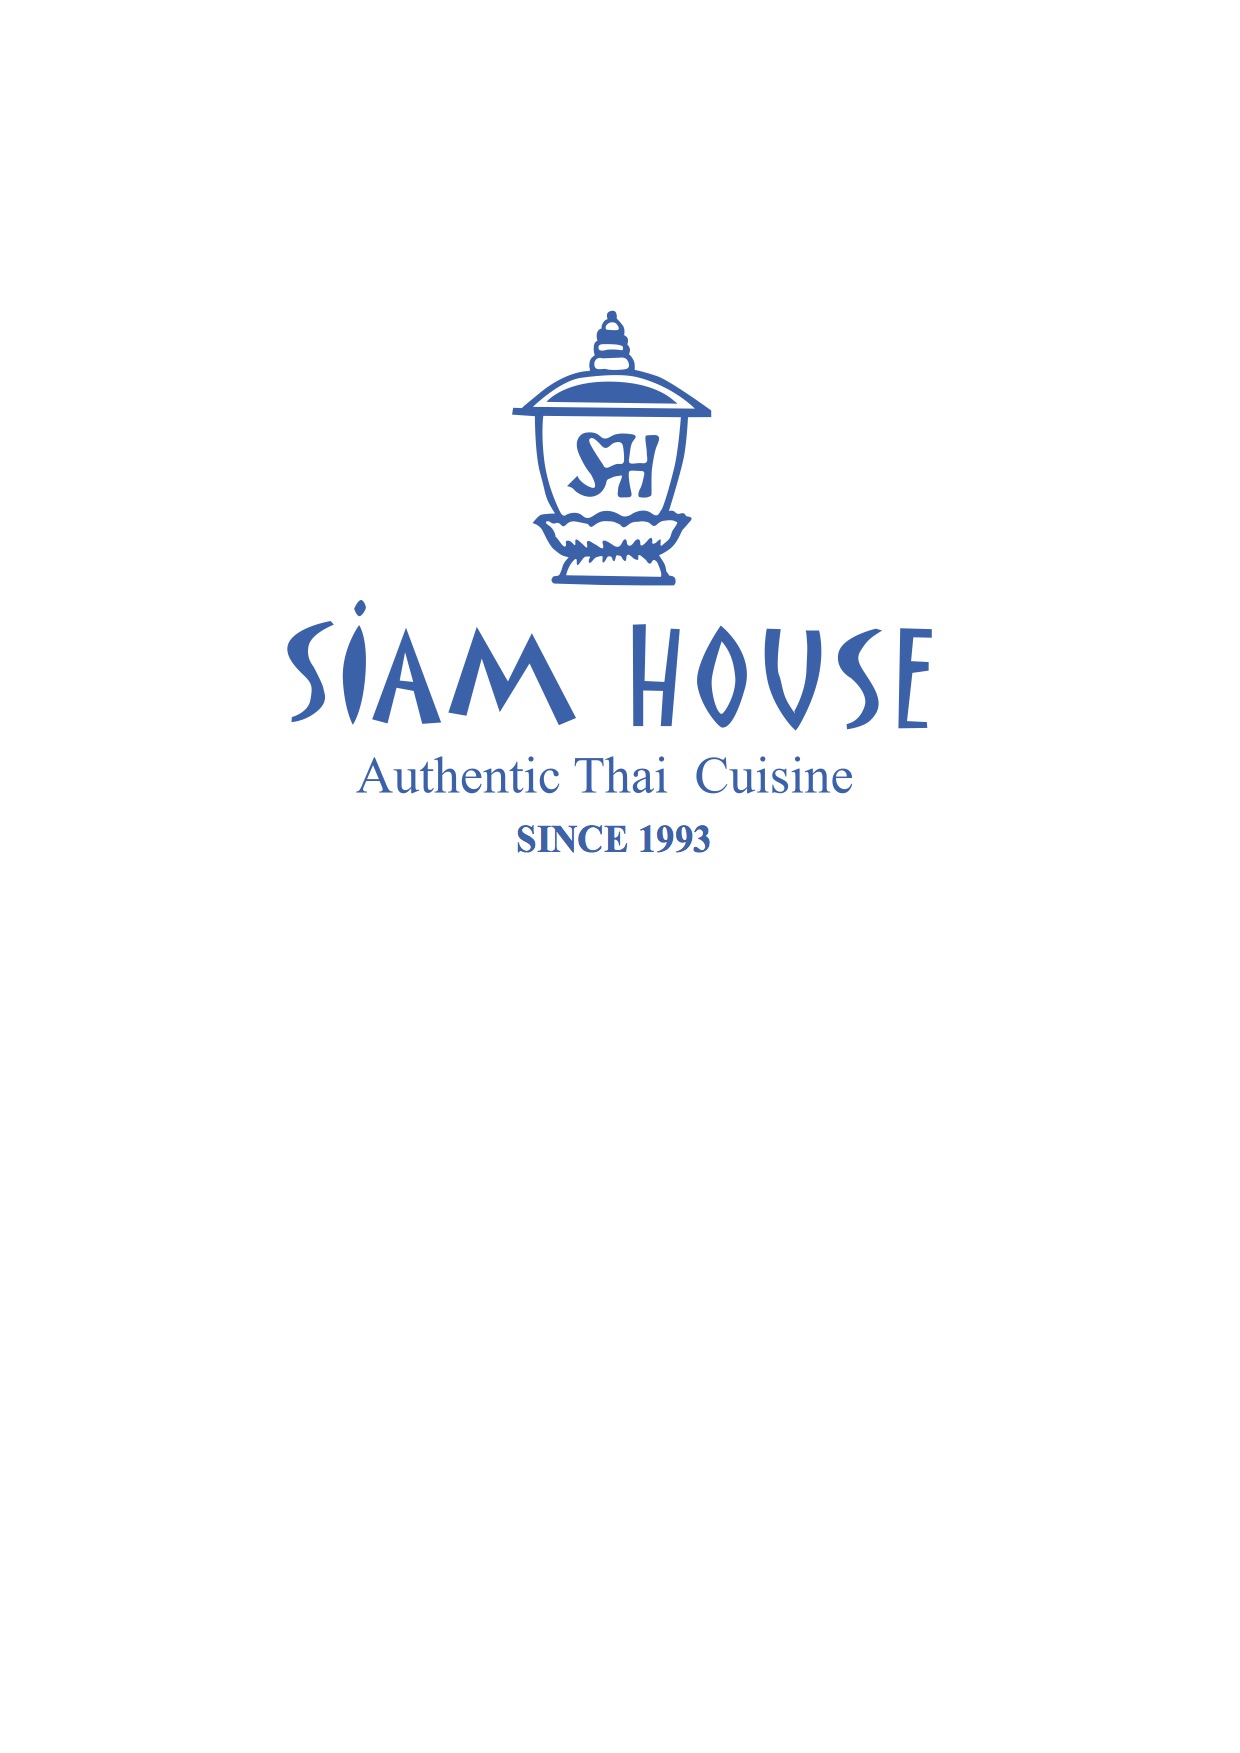 Siam House